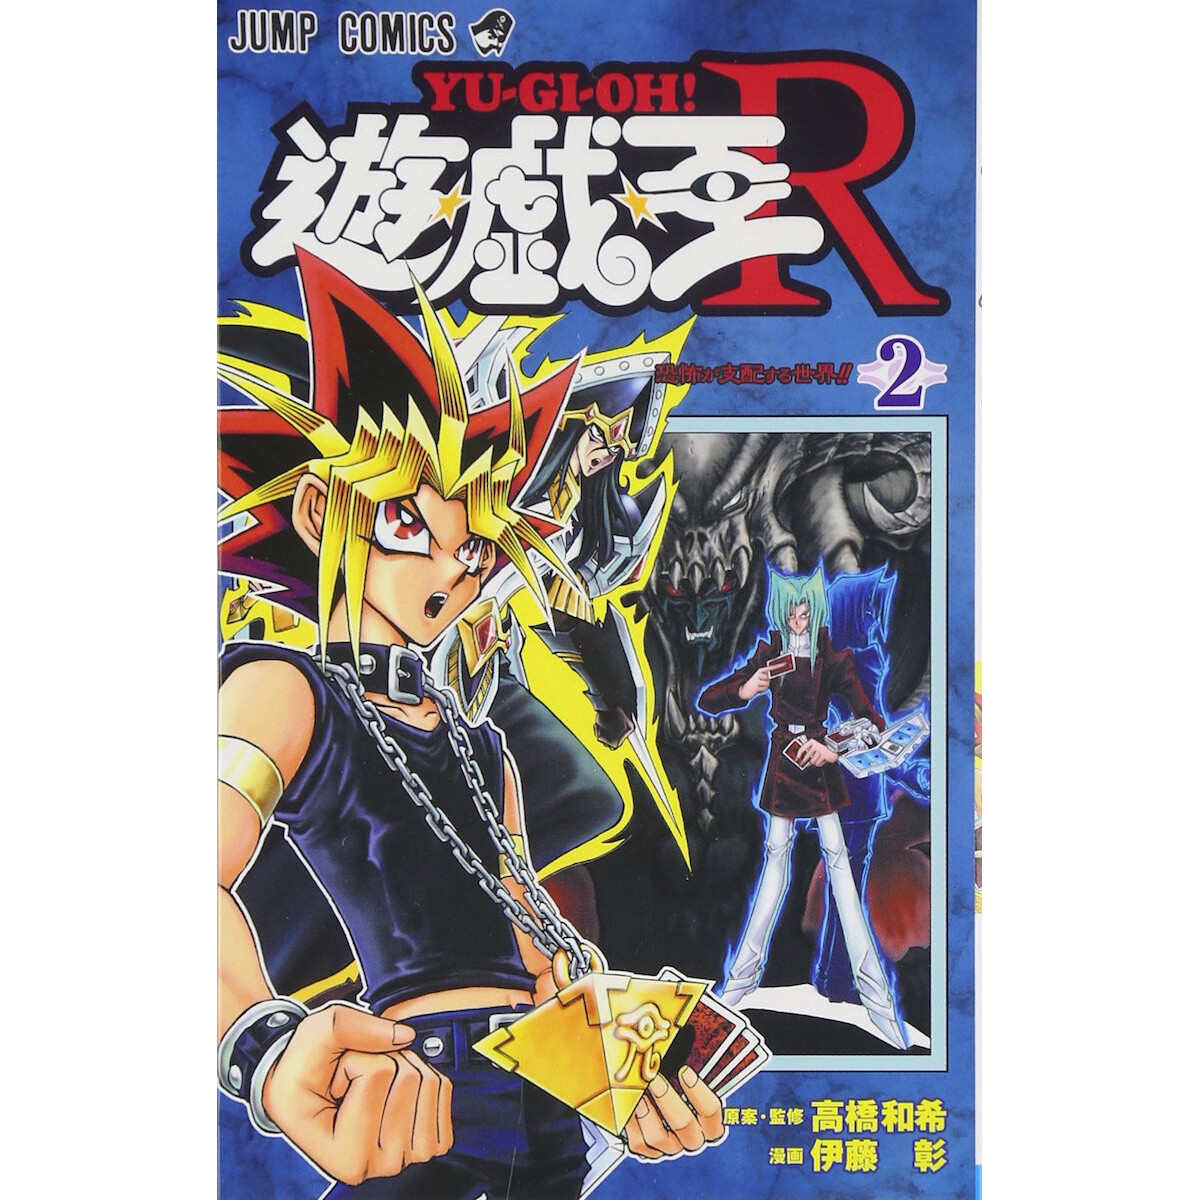 yugioh r manga download